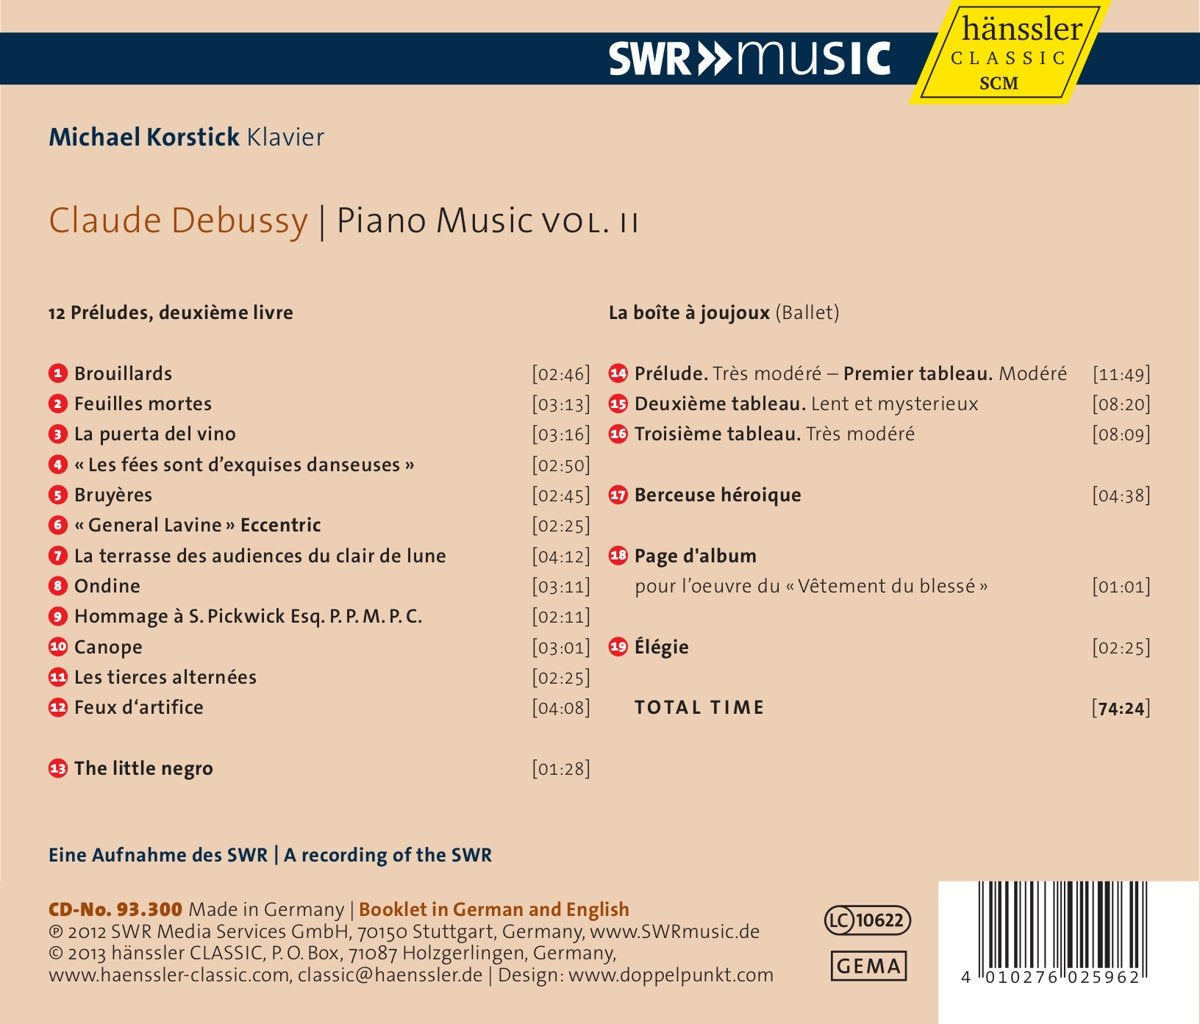 DEBUSSY: Piano Music, Vol. 2 - Michael Korstick